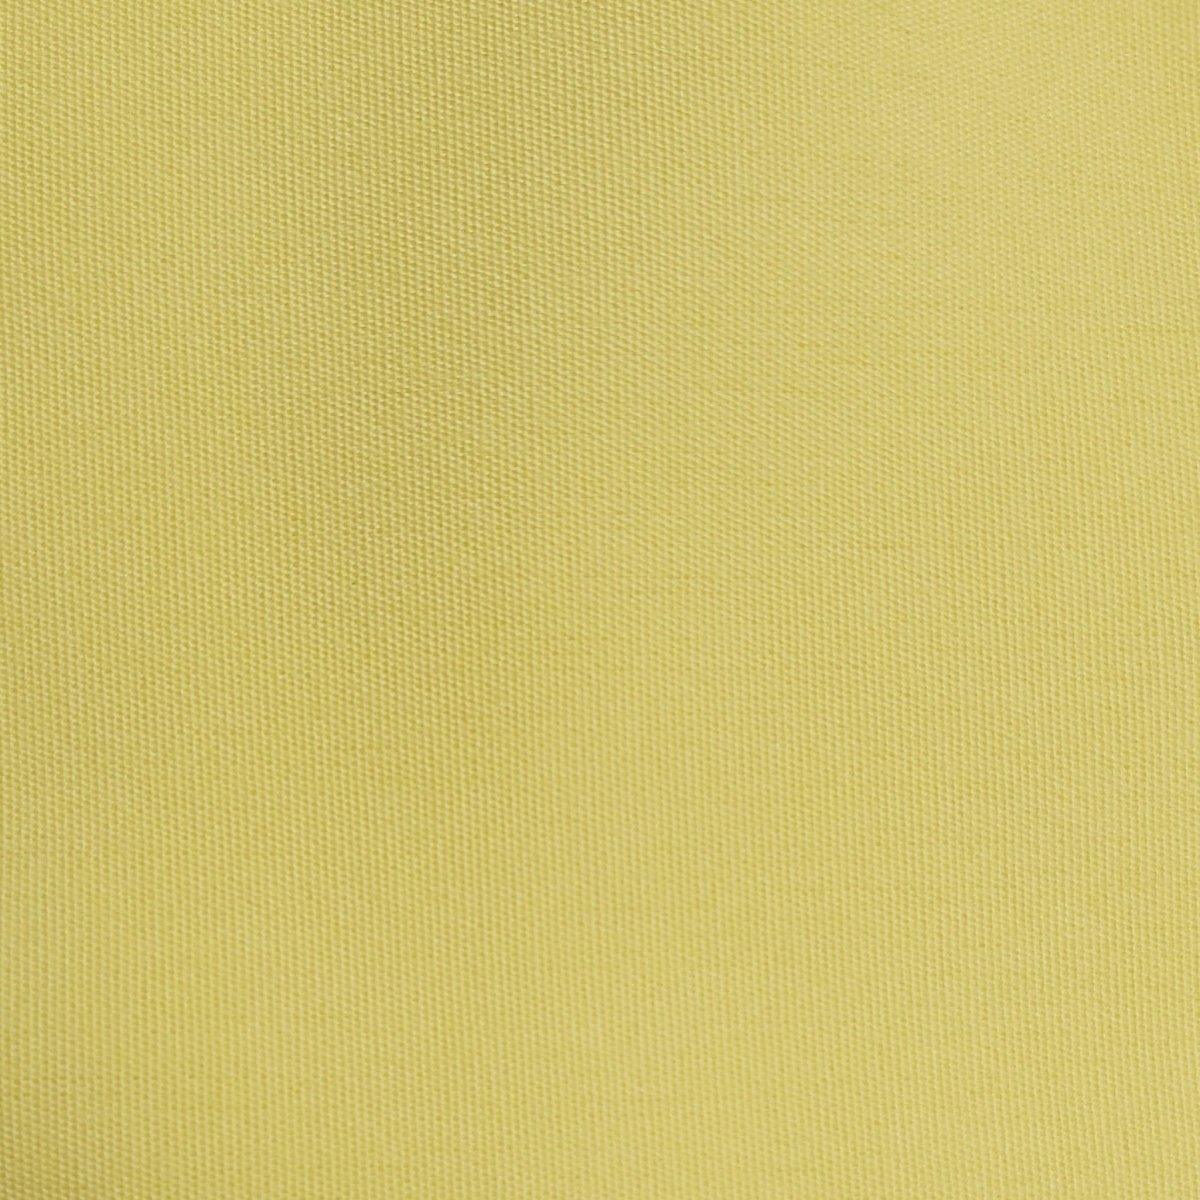 Outdoor Fabric Waterproof Picnic Yellow Fabric